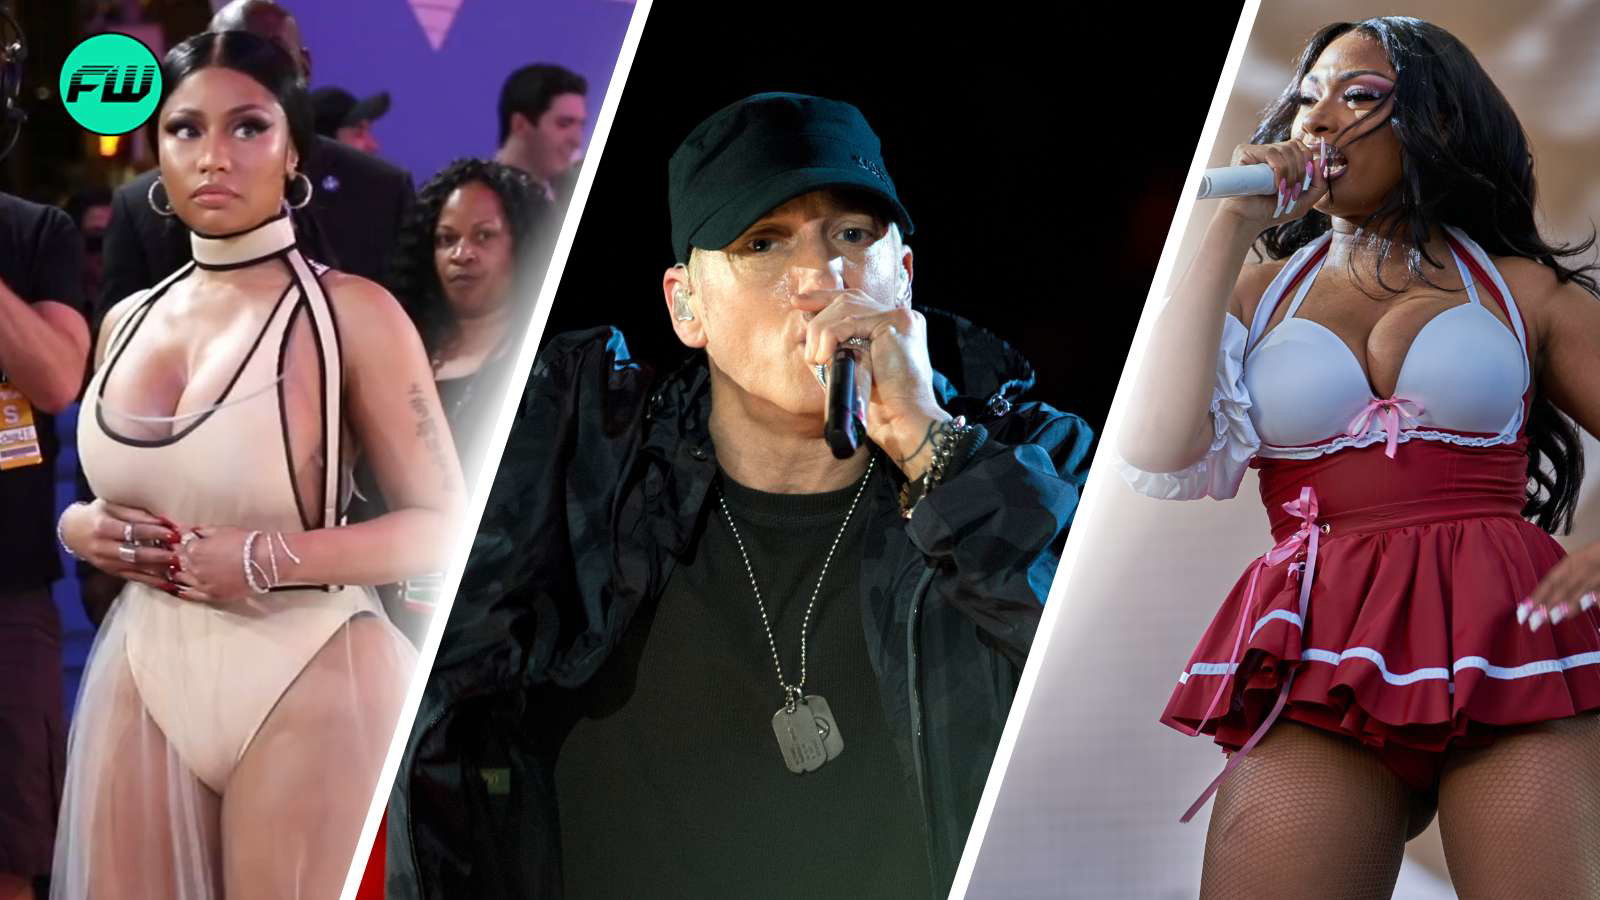 Eminem, Nicki Minaj and Megan Thee Stallion